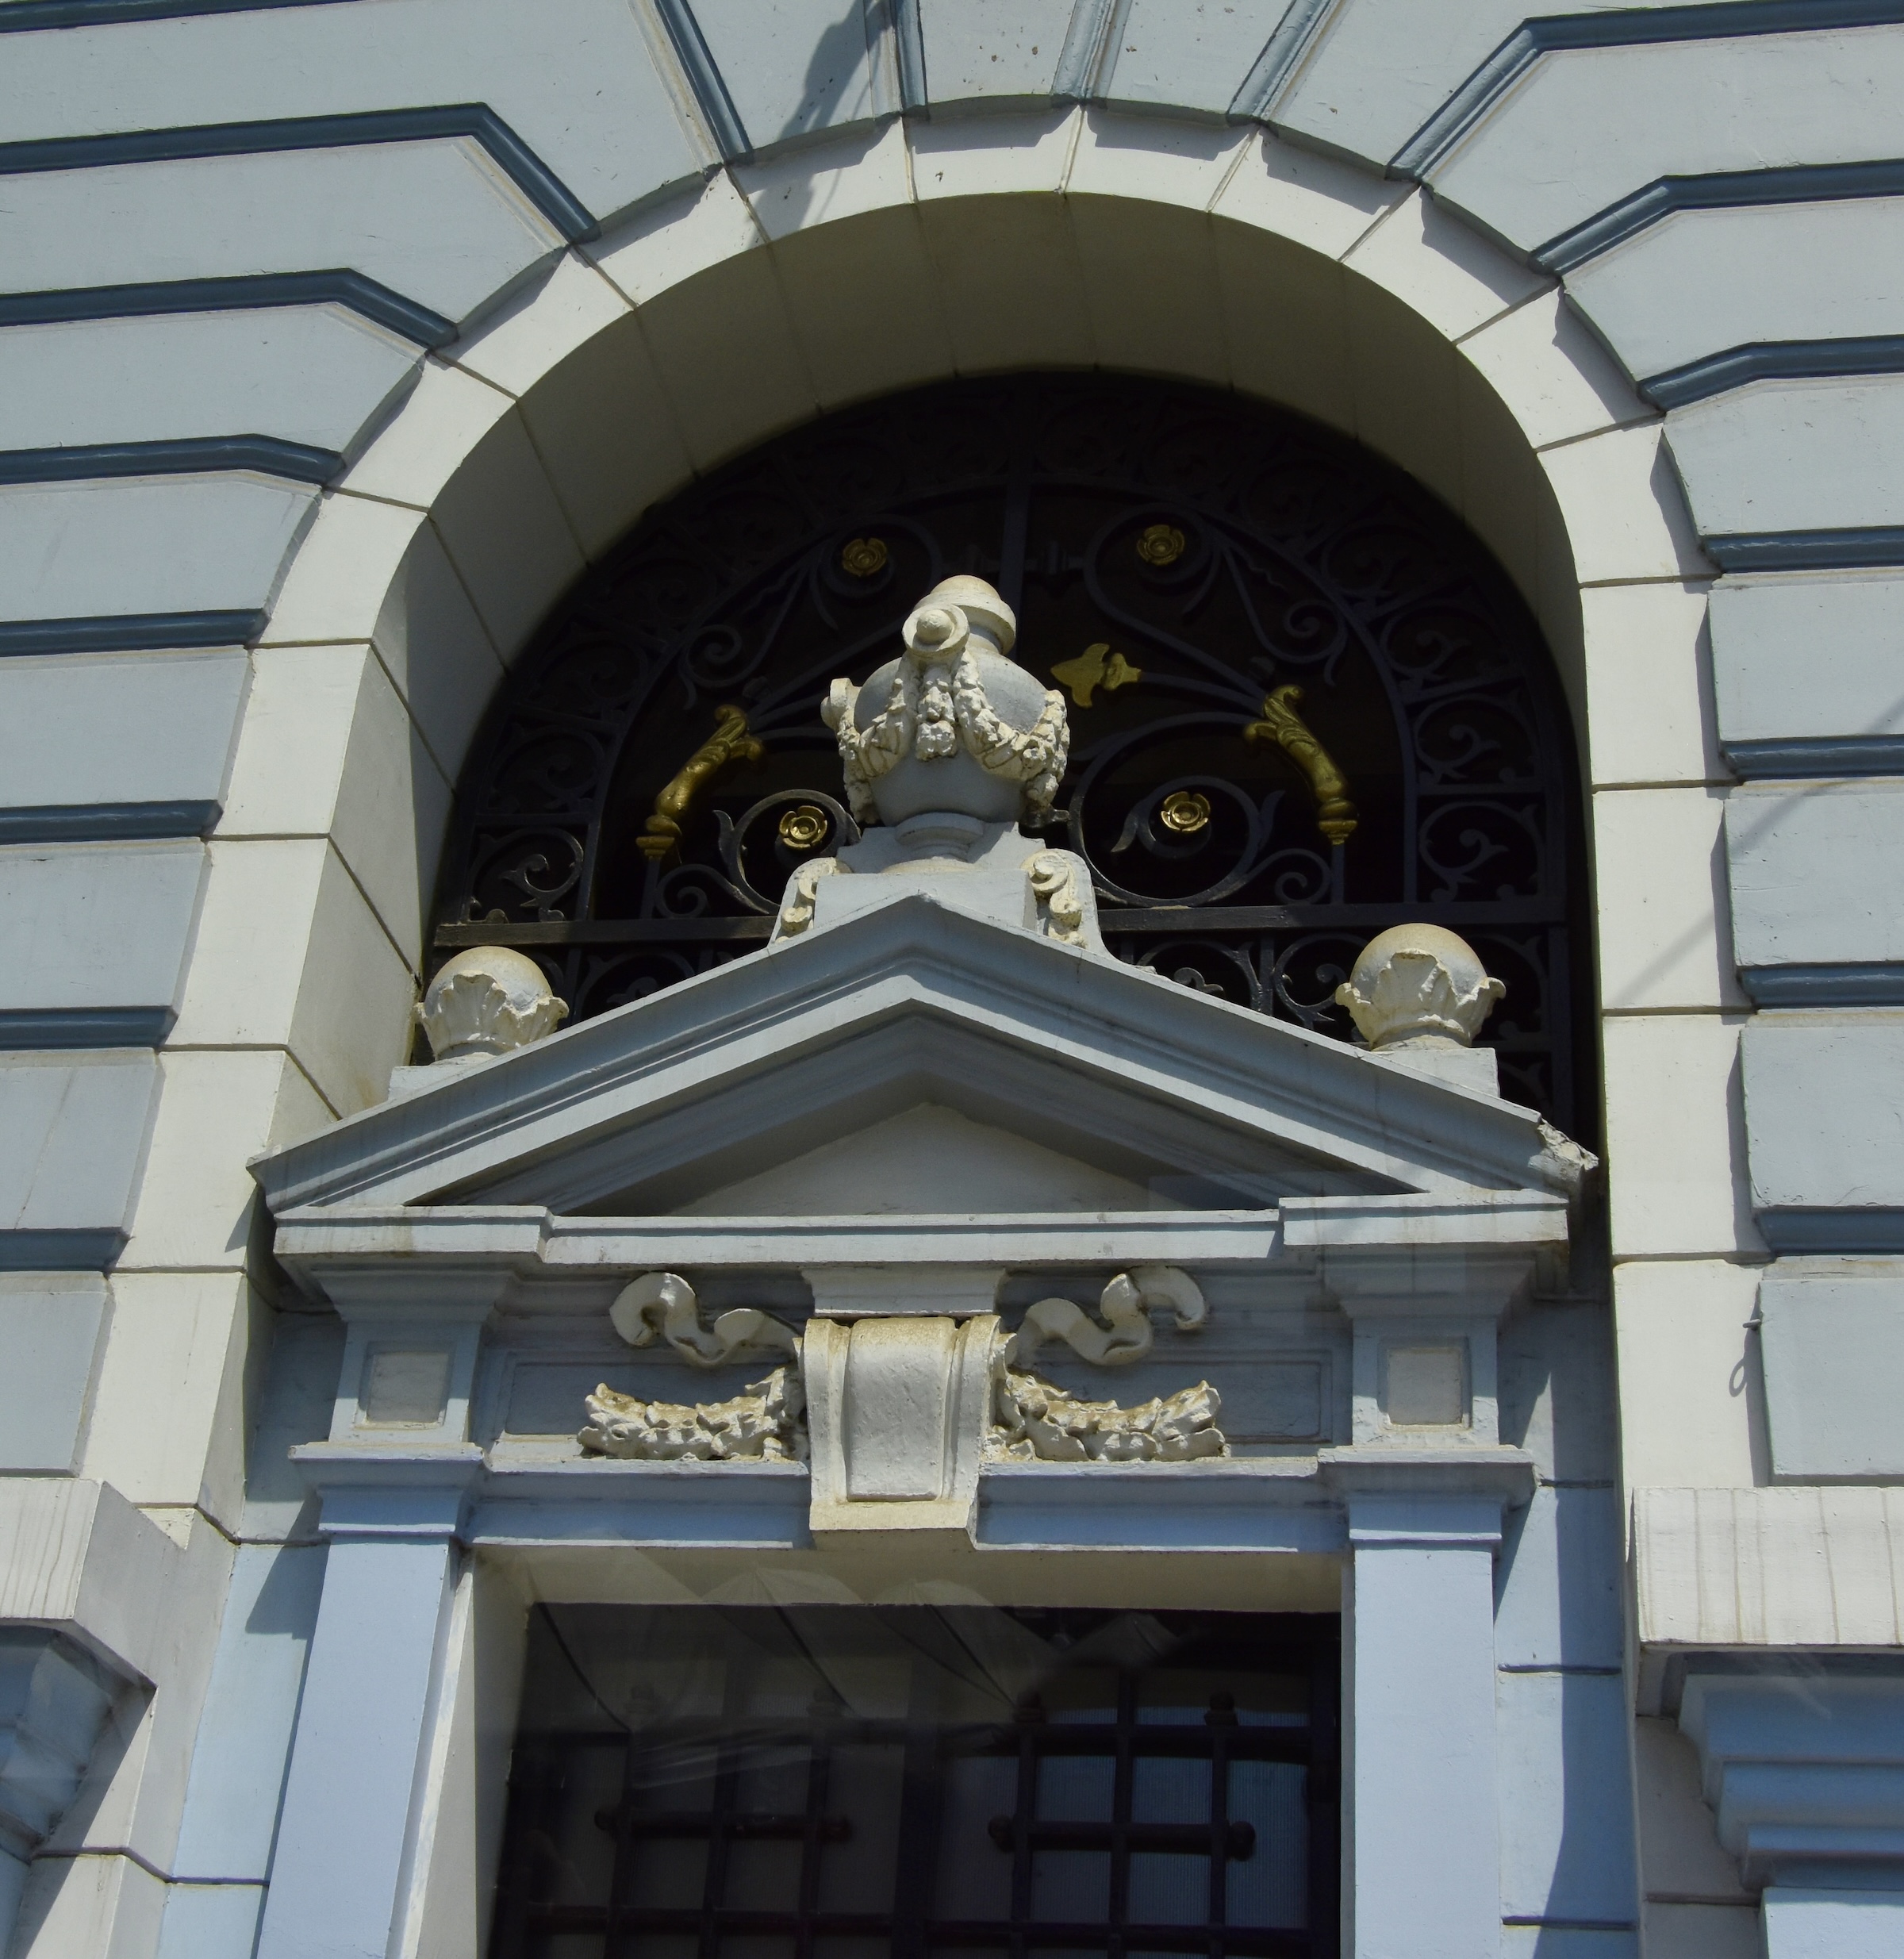 Entrance to the Naval Headquarters, Valparaiso